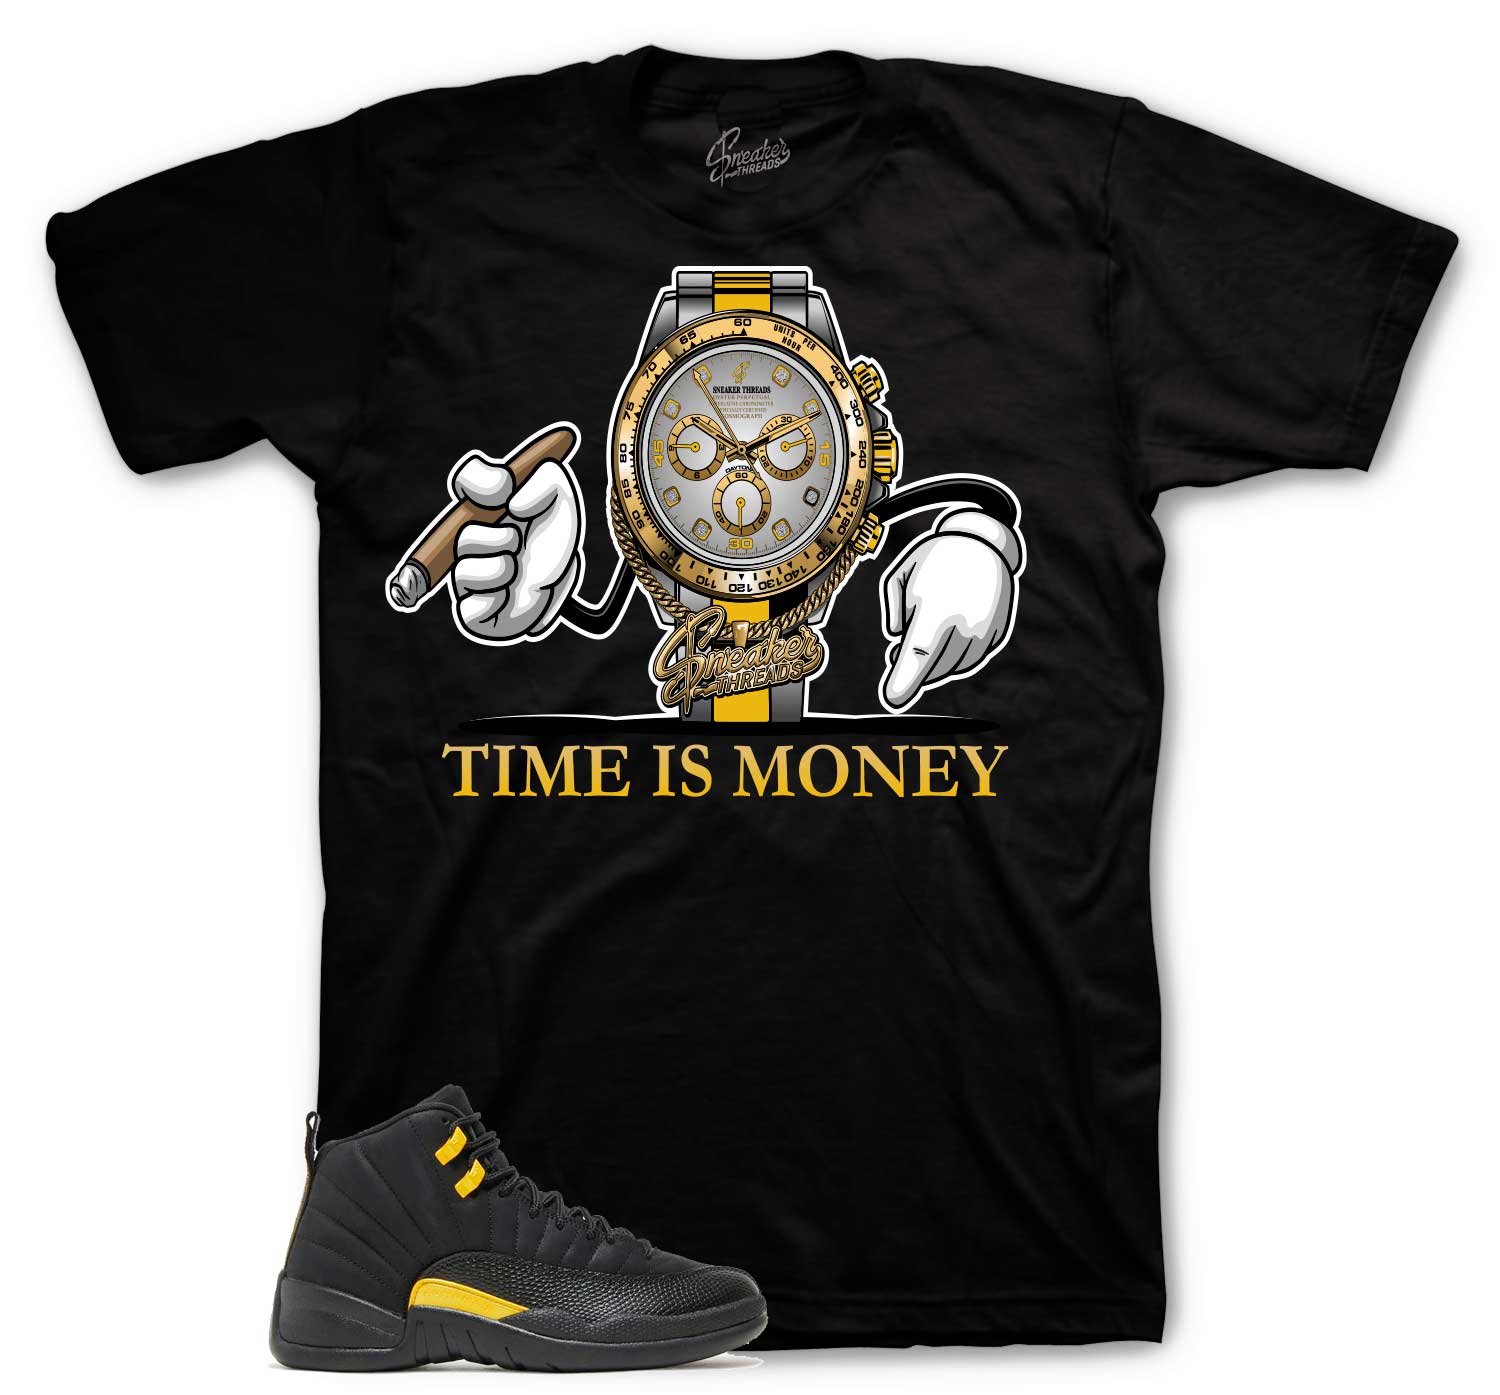 Retro 12 Black Taxi Shirt - Time Is Money - Black